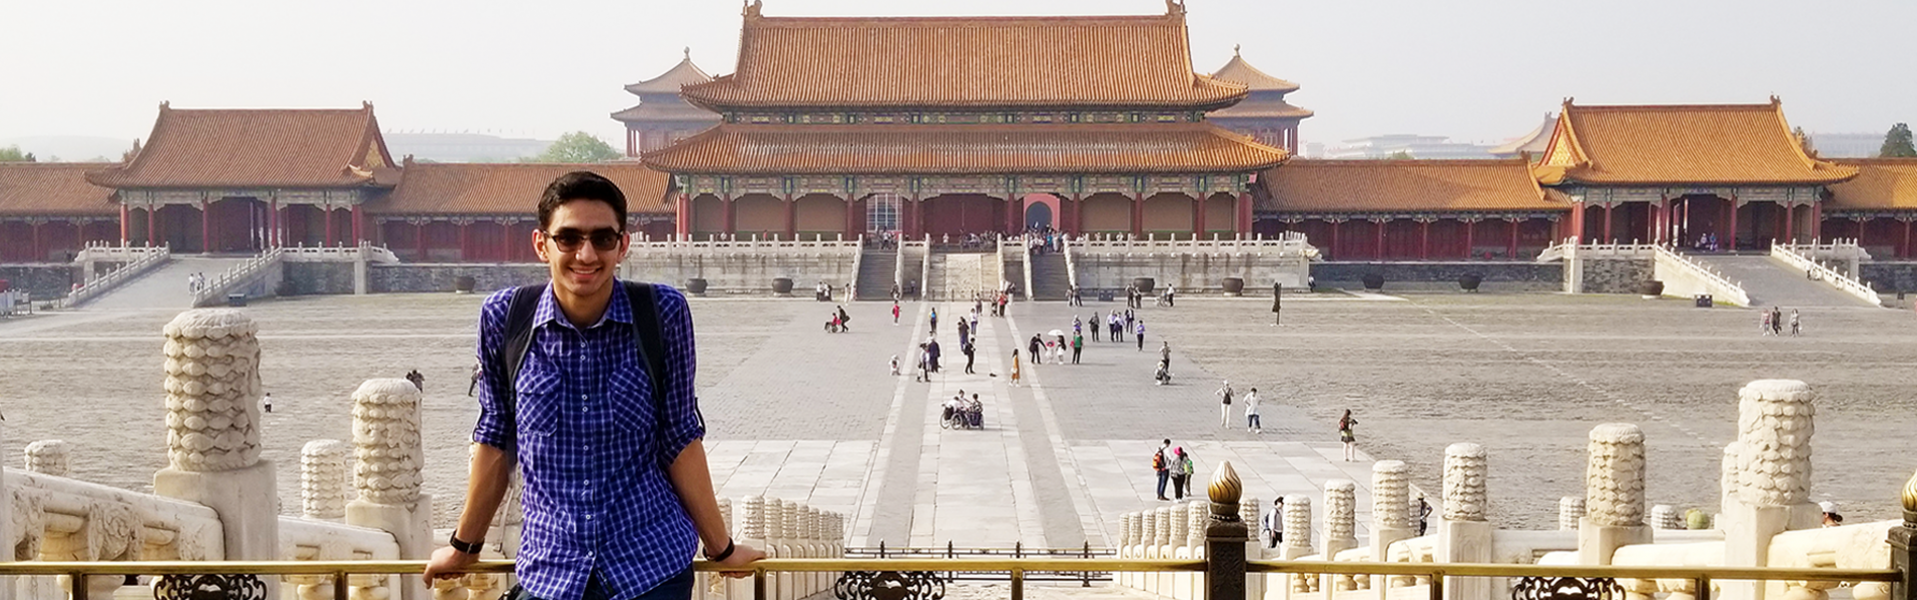 Parsa Shani in China's Forbidden City